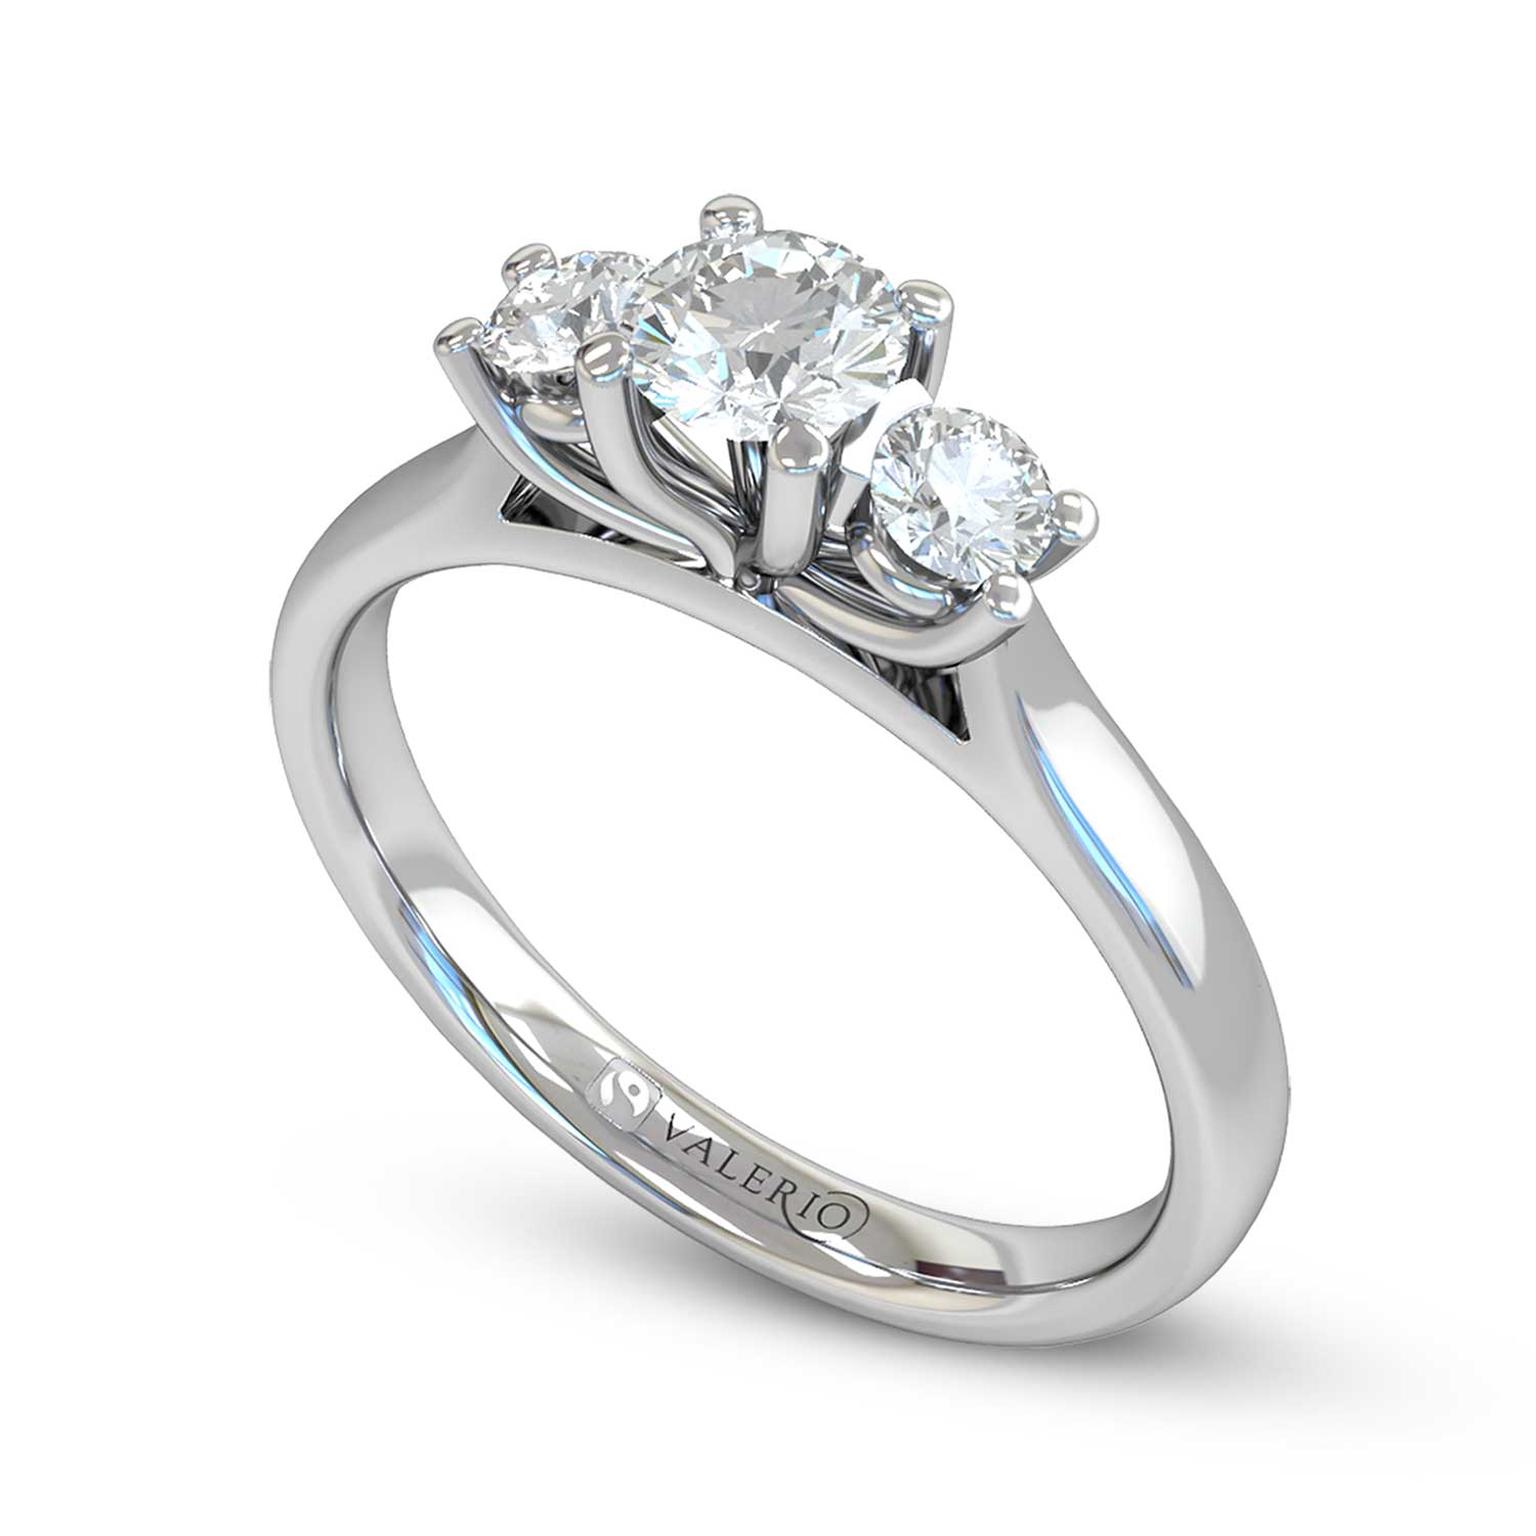 Greg Valerio Canadian diamond engagement ring